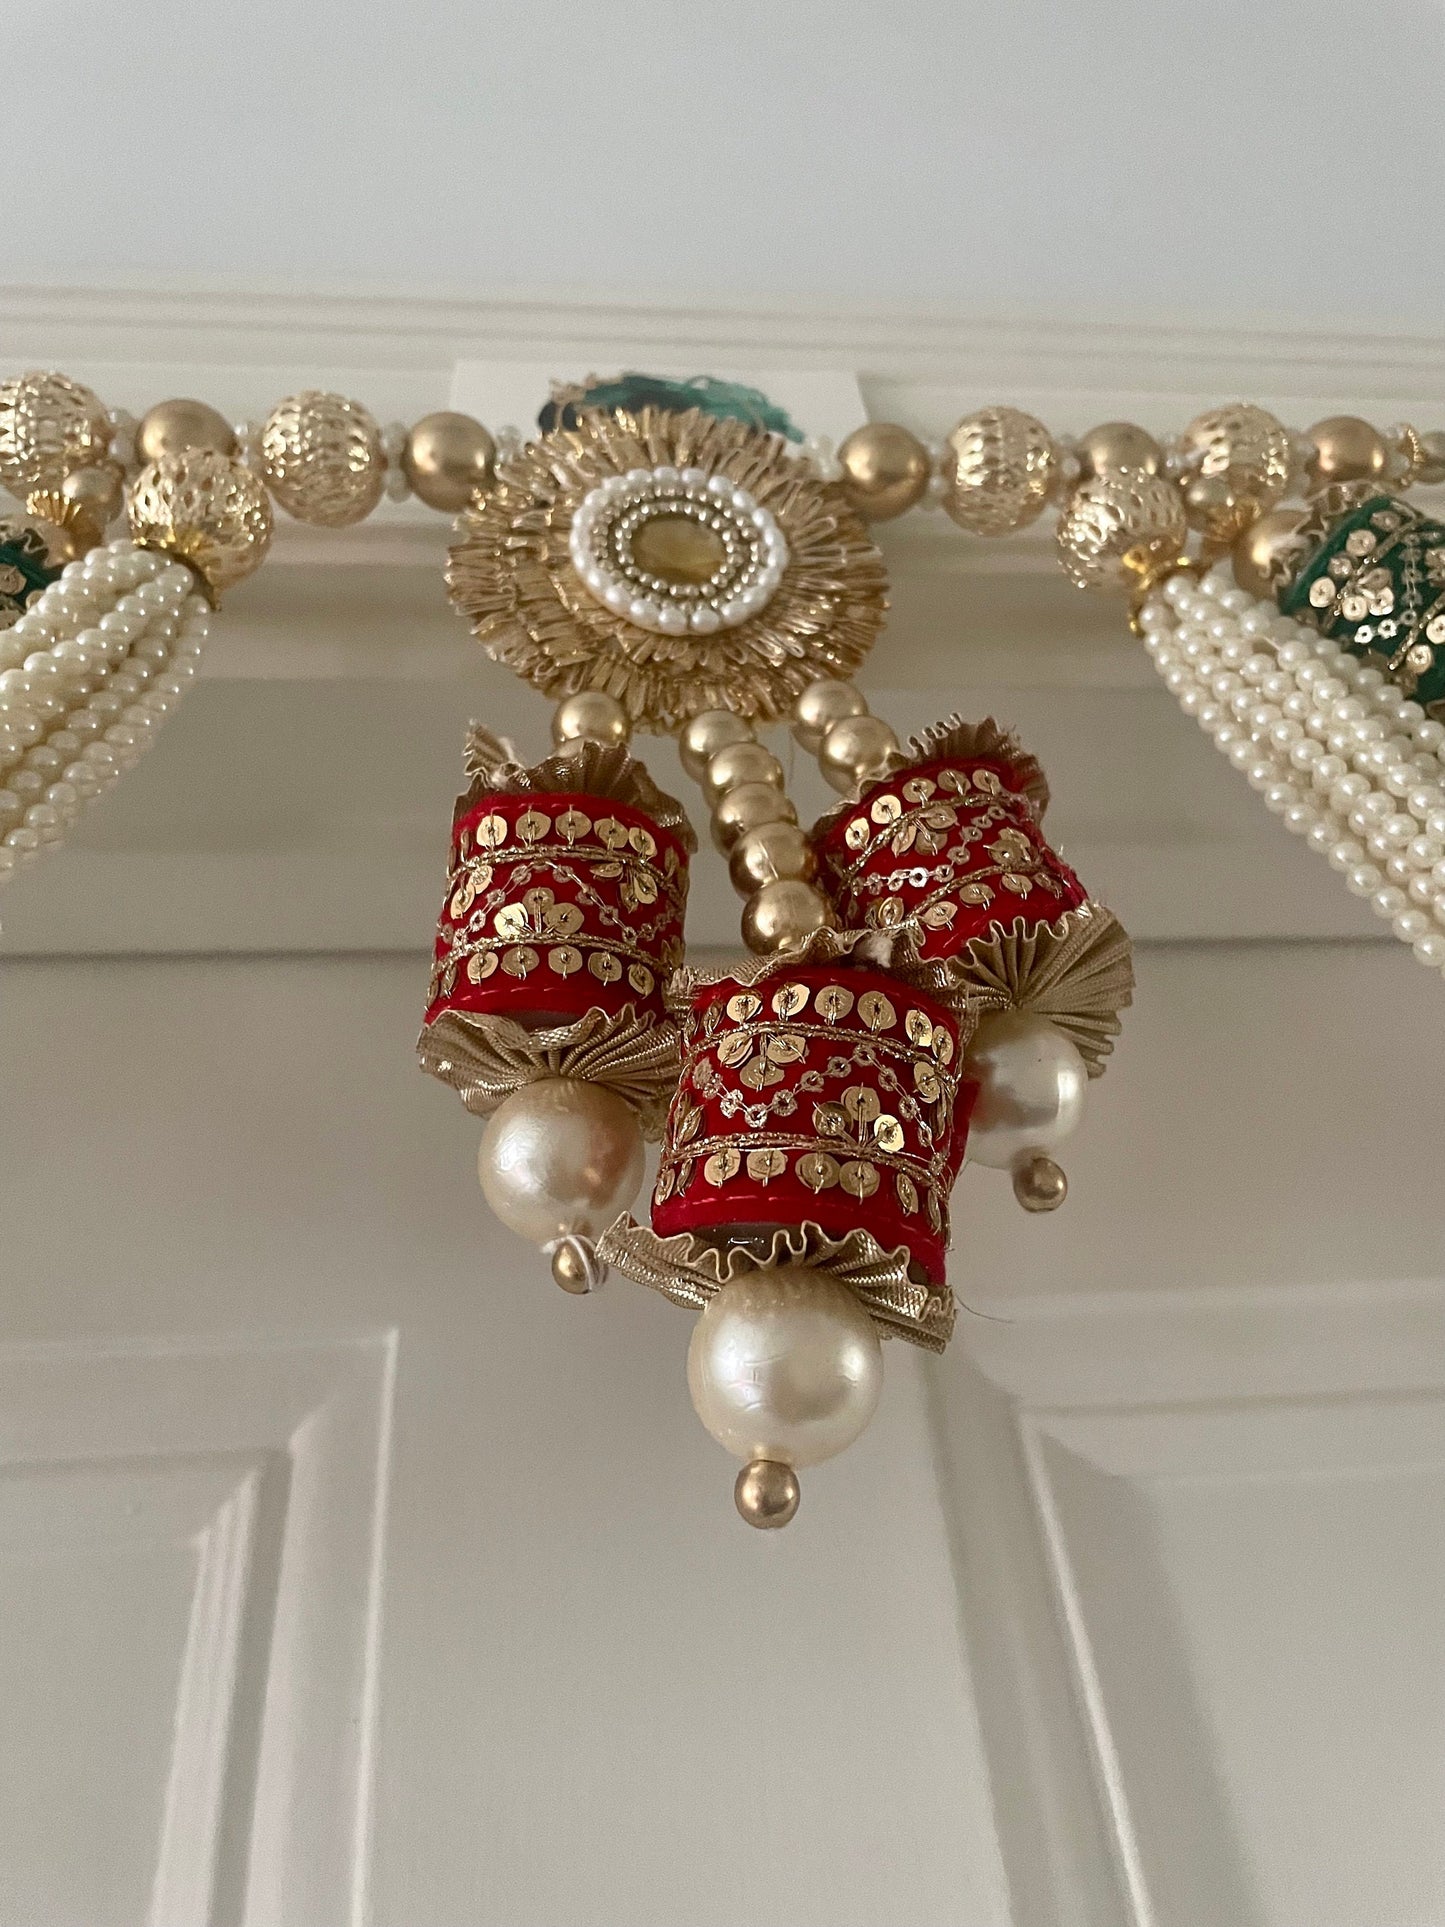 Kamakshi Toran| Thiran Door Hanging |Bandalwar| Bandarwar| Welcome Lakshmi| Diwali Decorations for the Front Door| New Home| Navratri